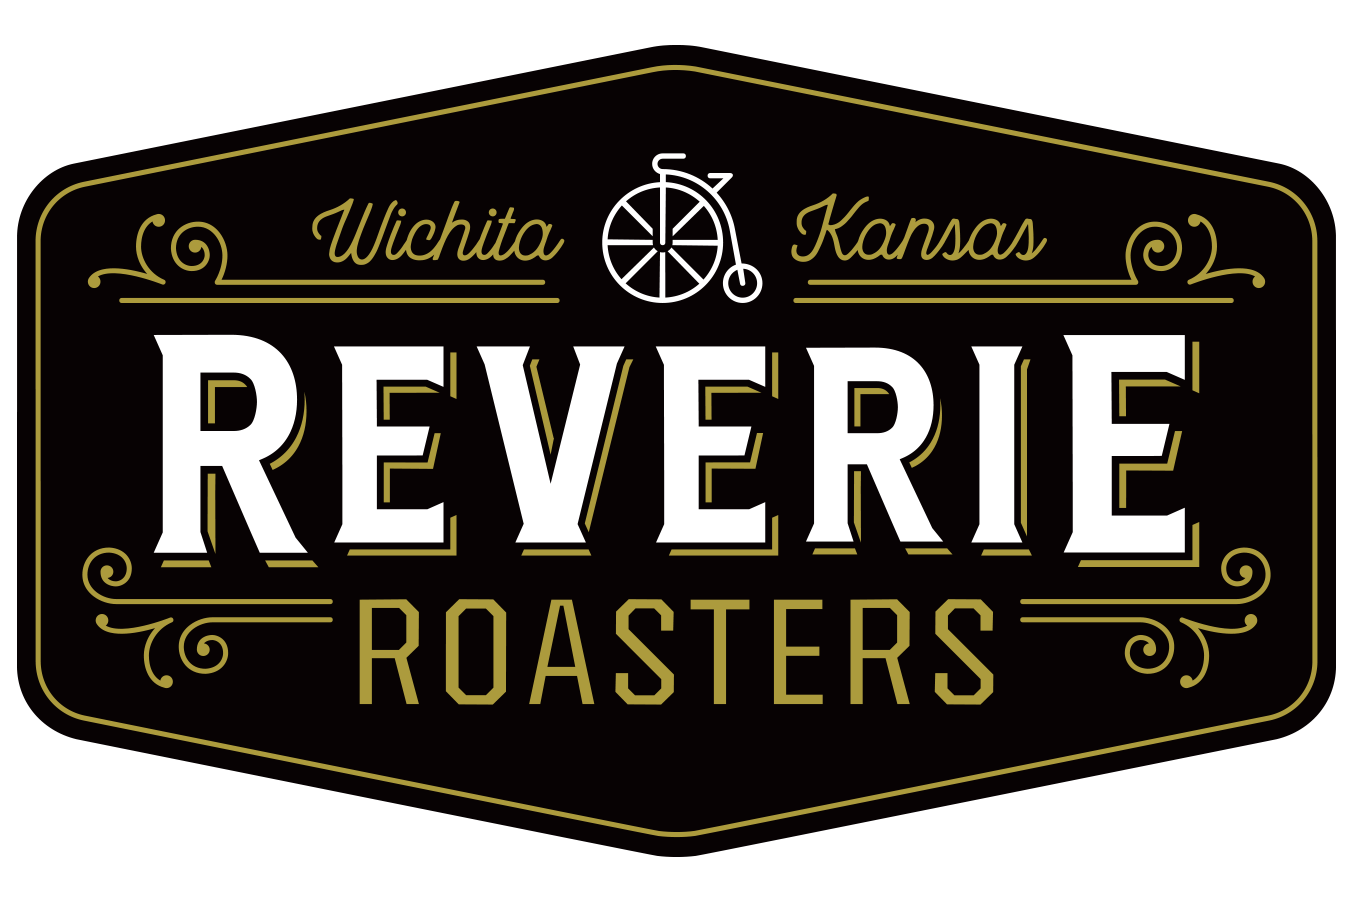 Reverie Coffee Roasters